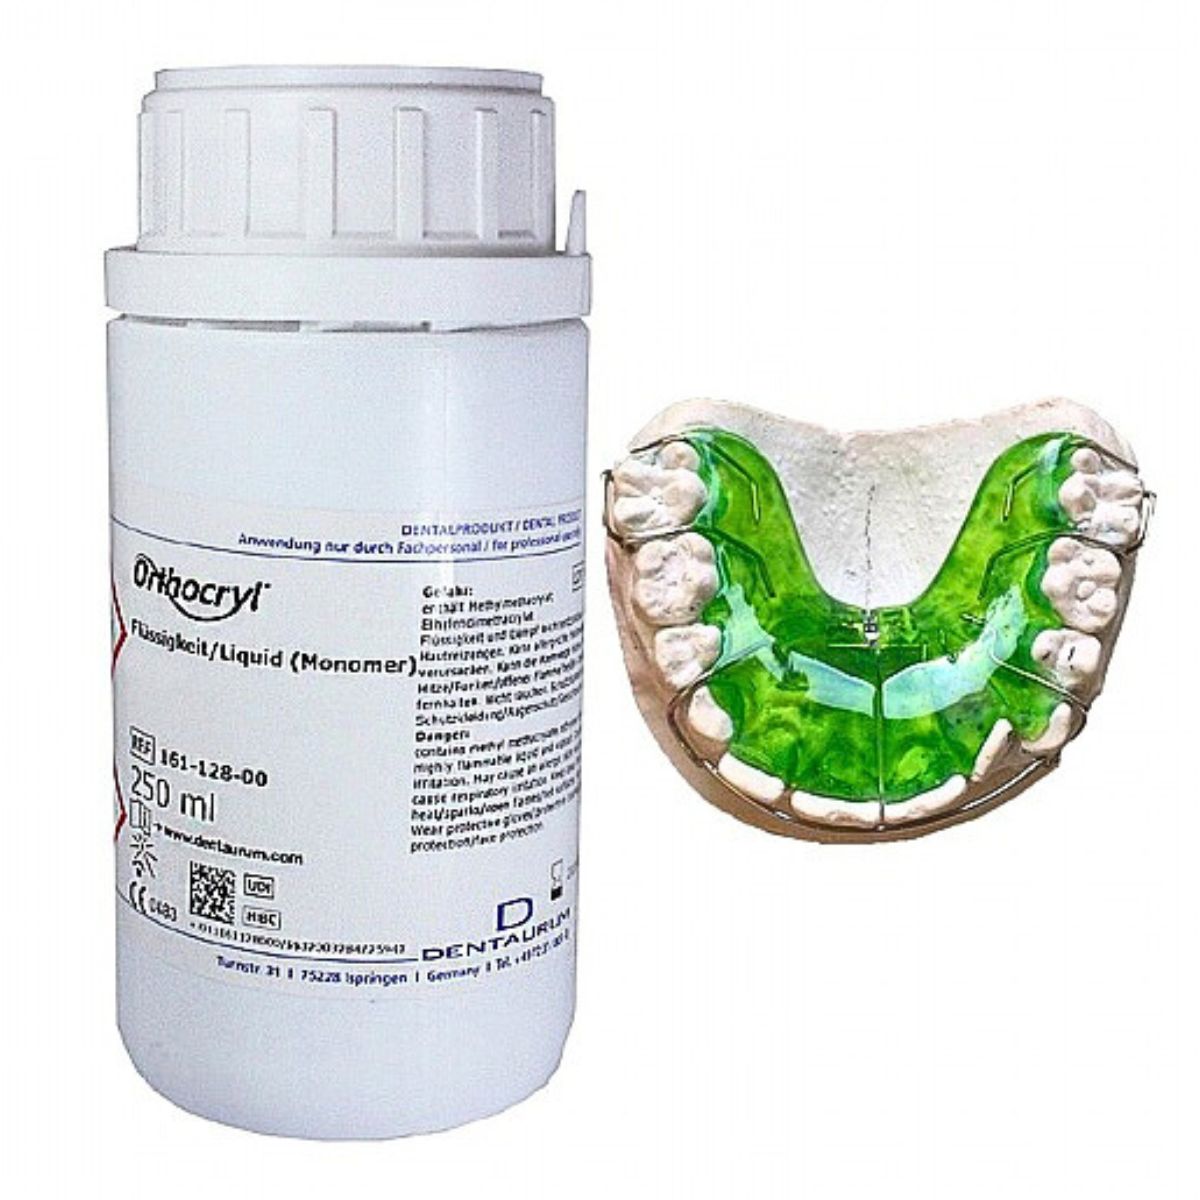 Dentaurum Orthocryl Green Acrylic Liquid 250ml